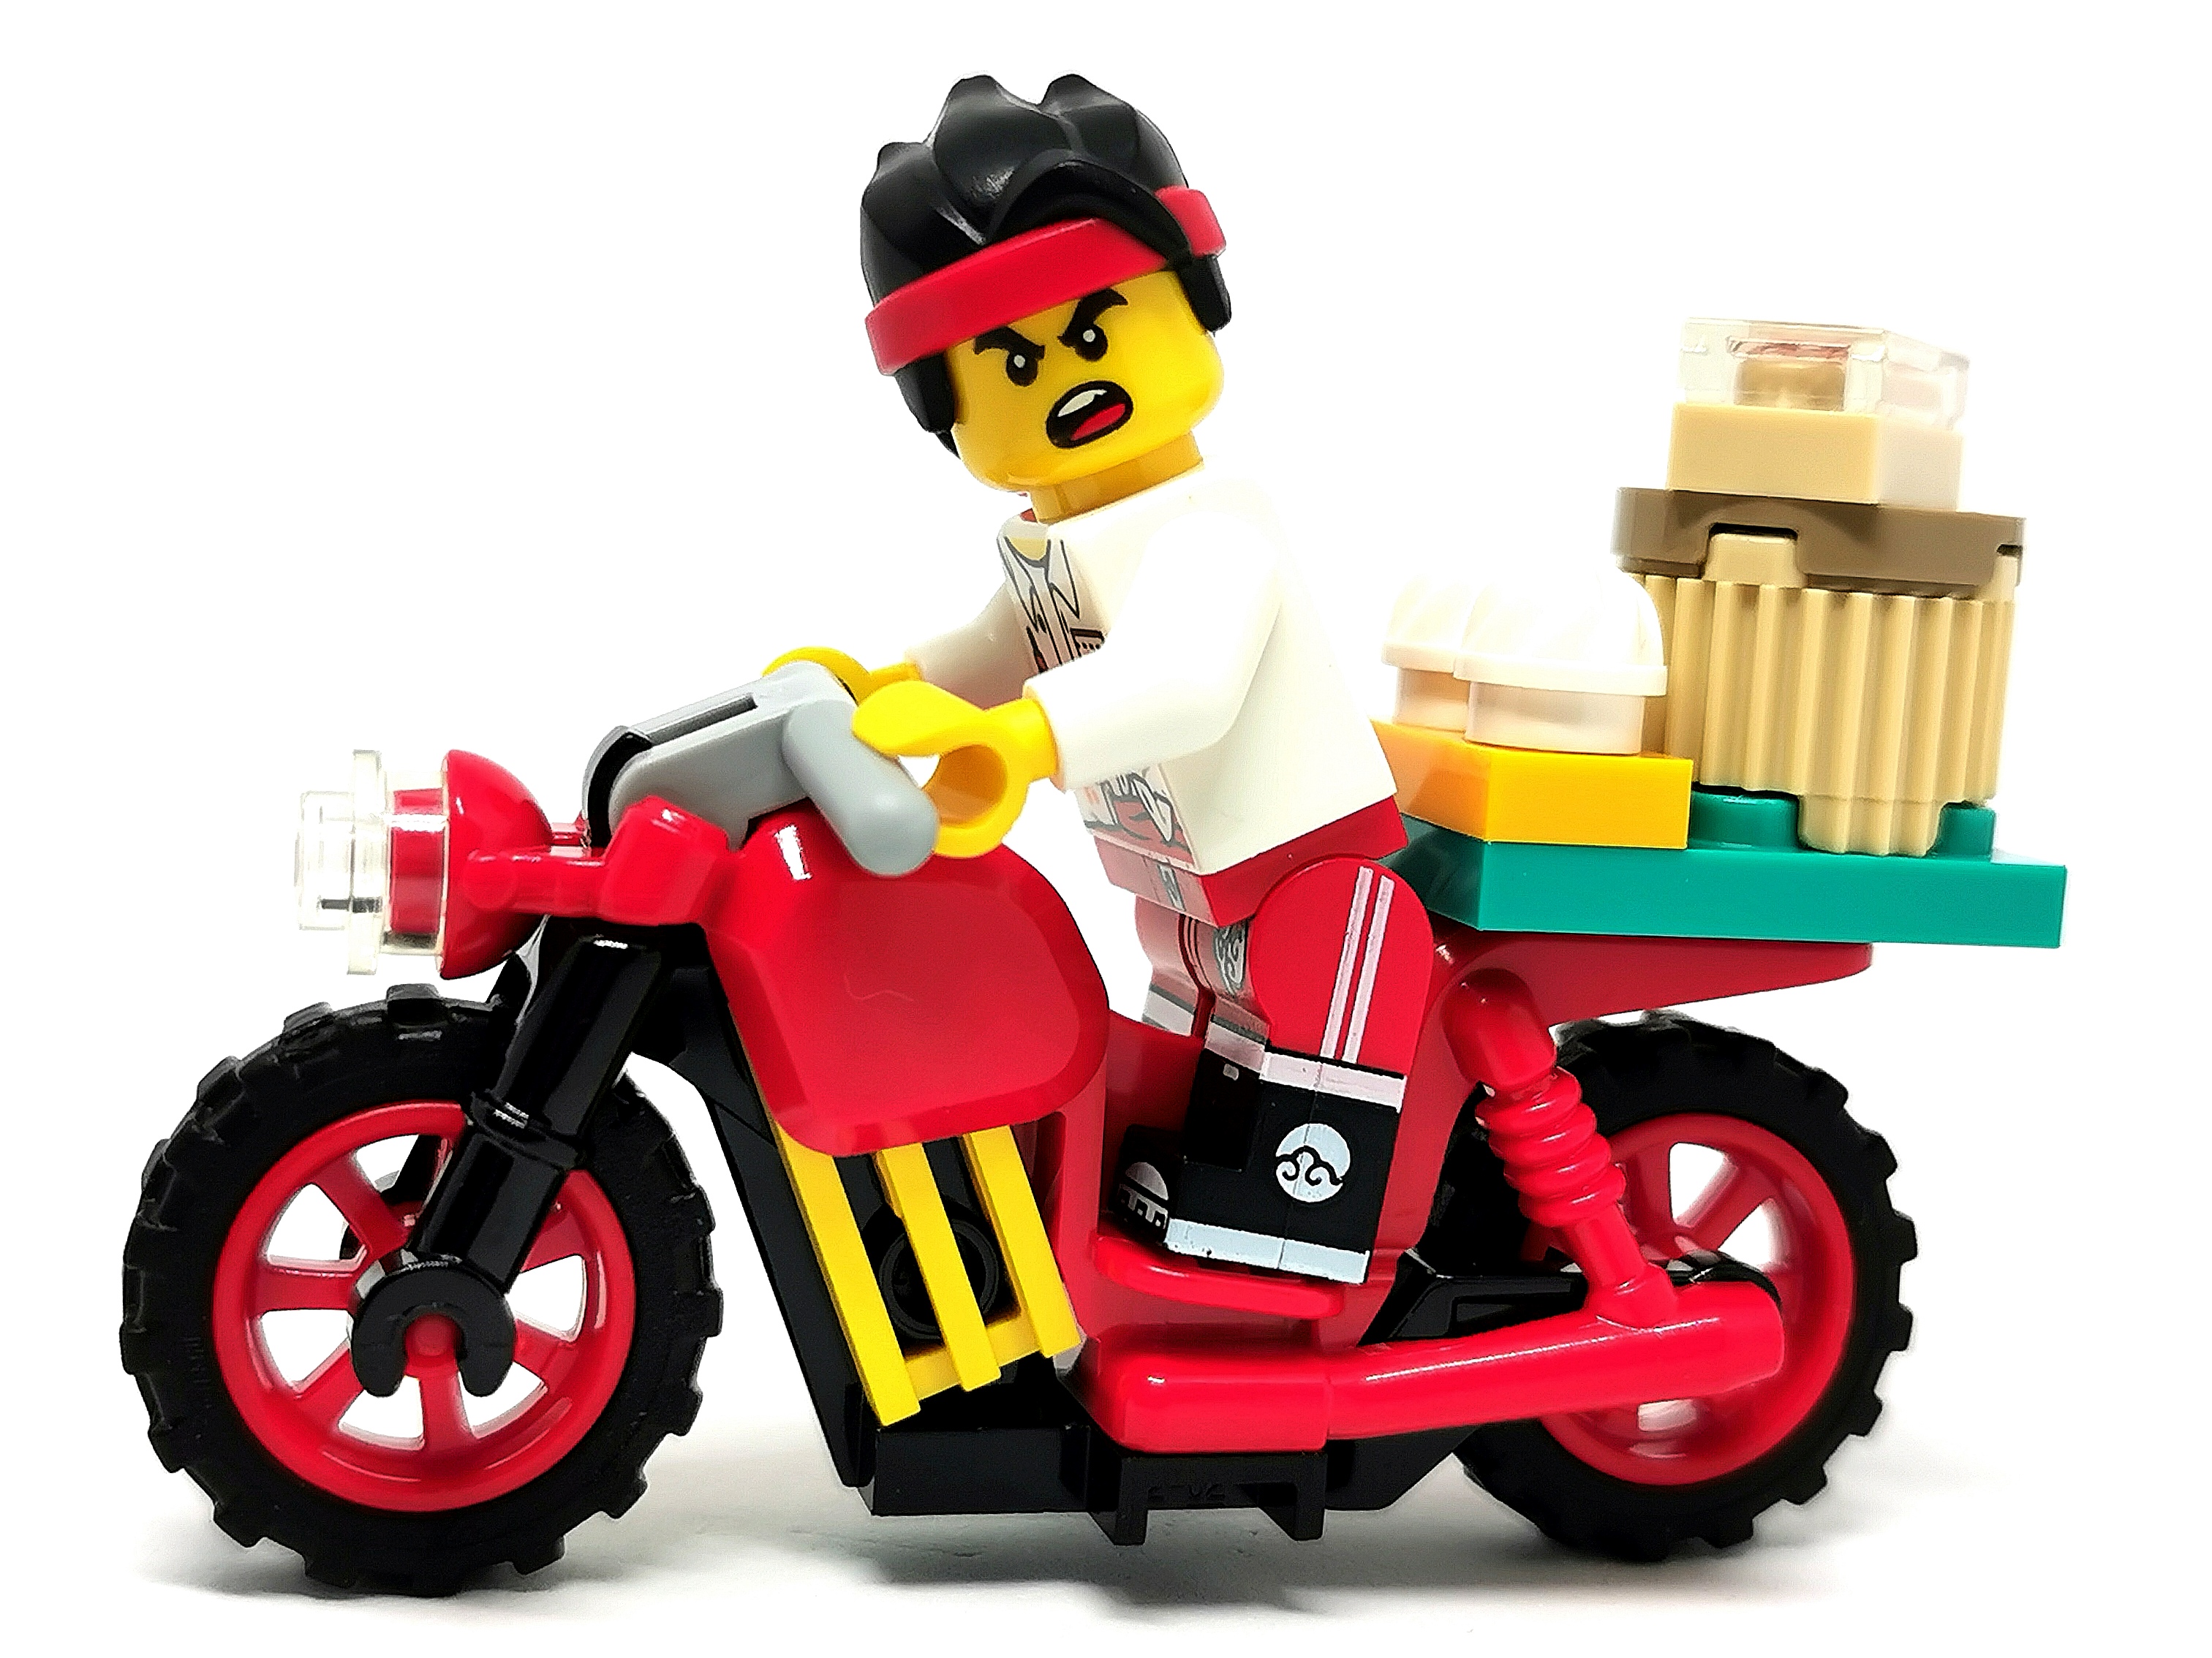 Delivery Bike Polybag Minifigure on Bike New LEGO 30341 Monkie Kid